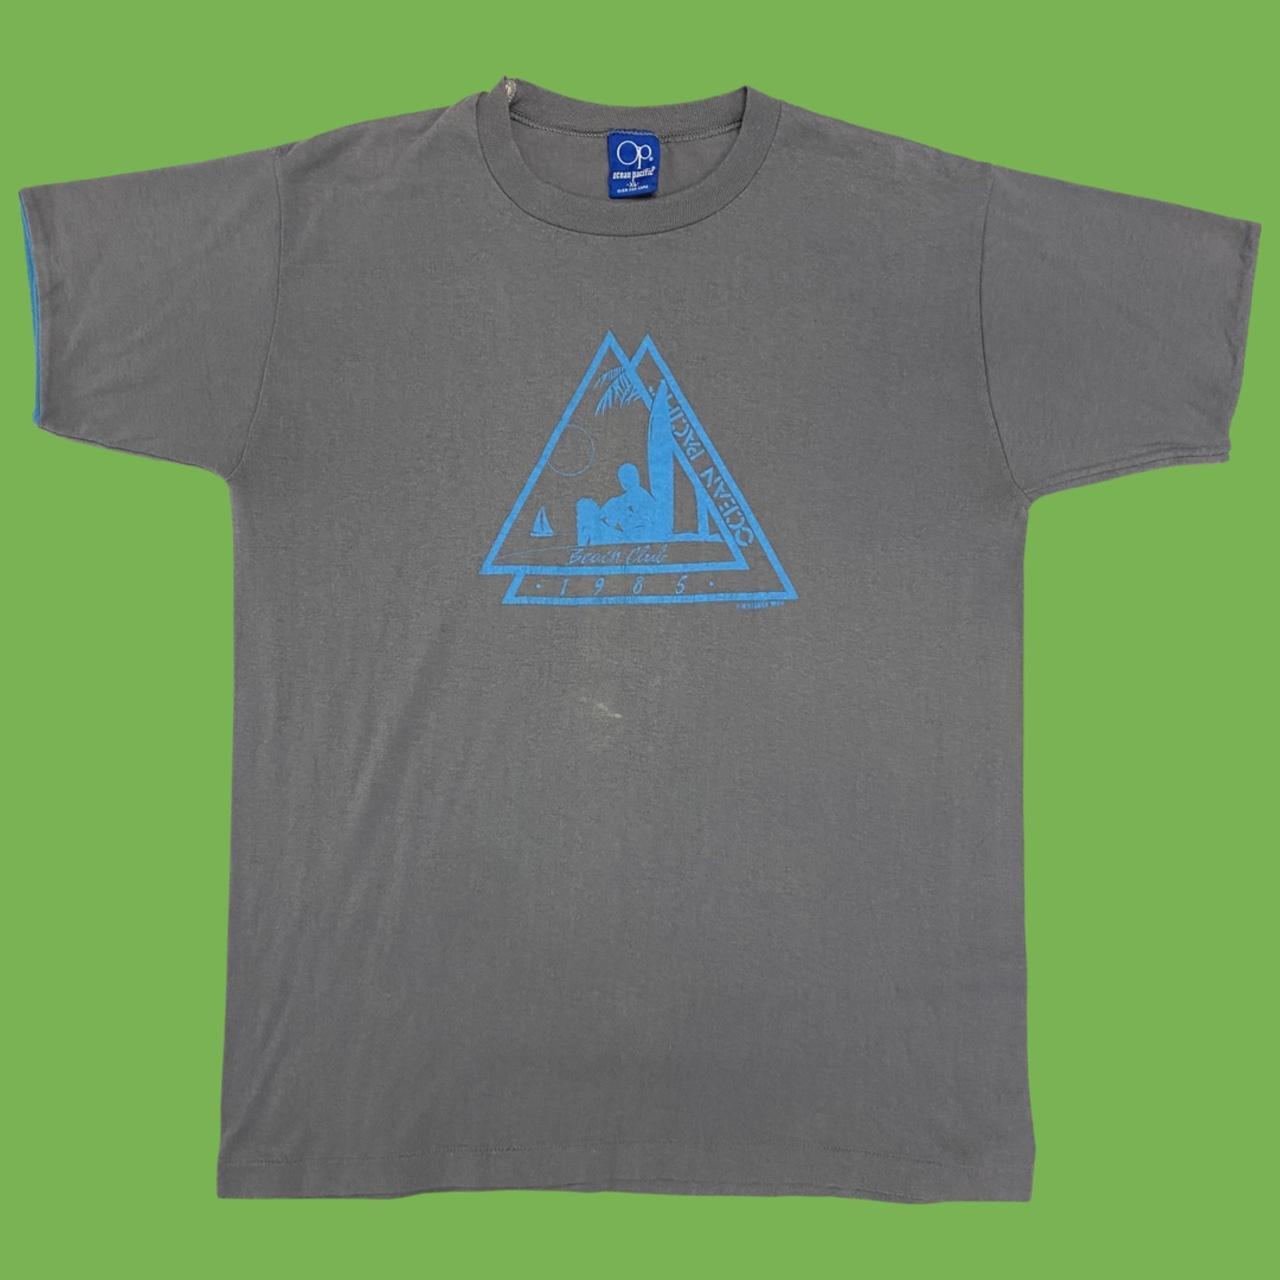 Ocean Pacific Men's Grey and Blue T-shirt